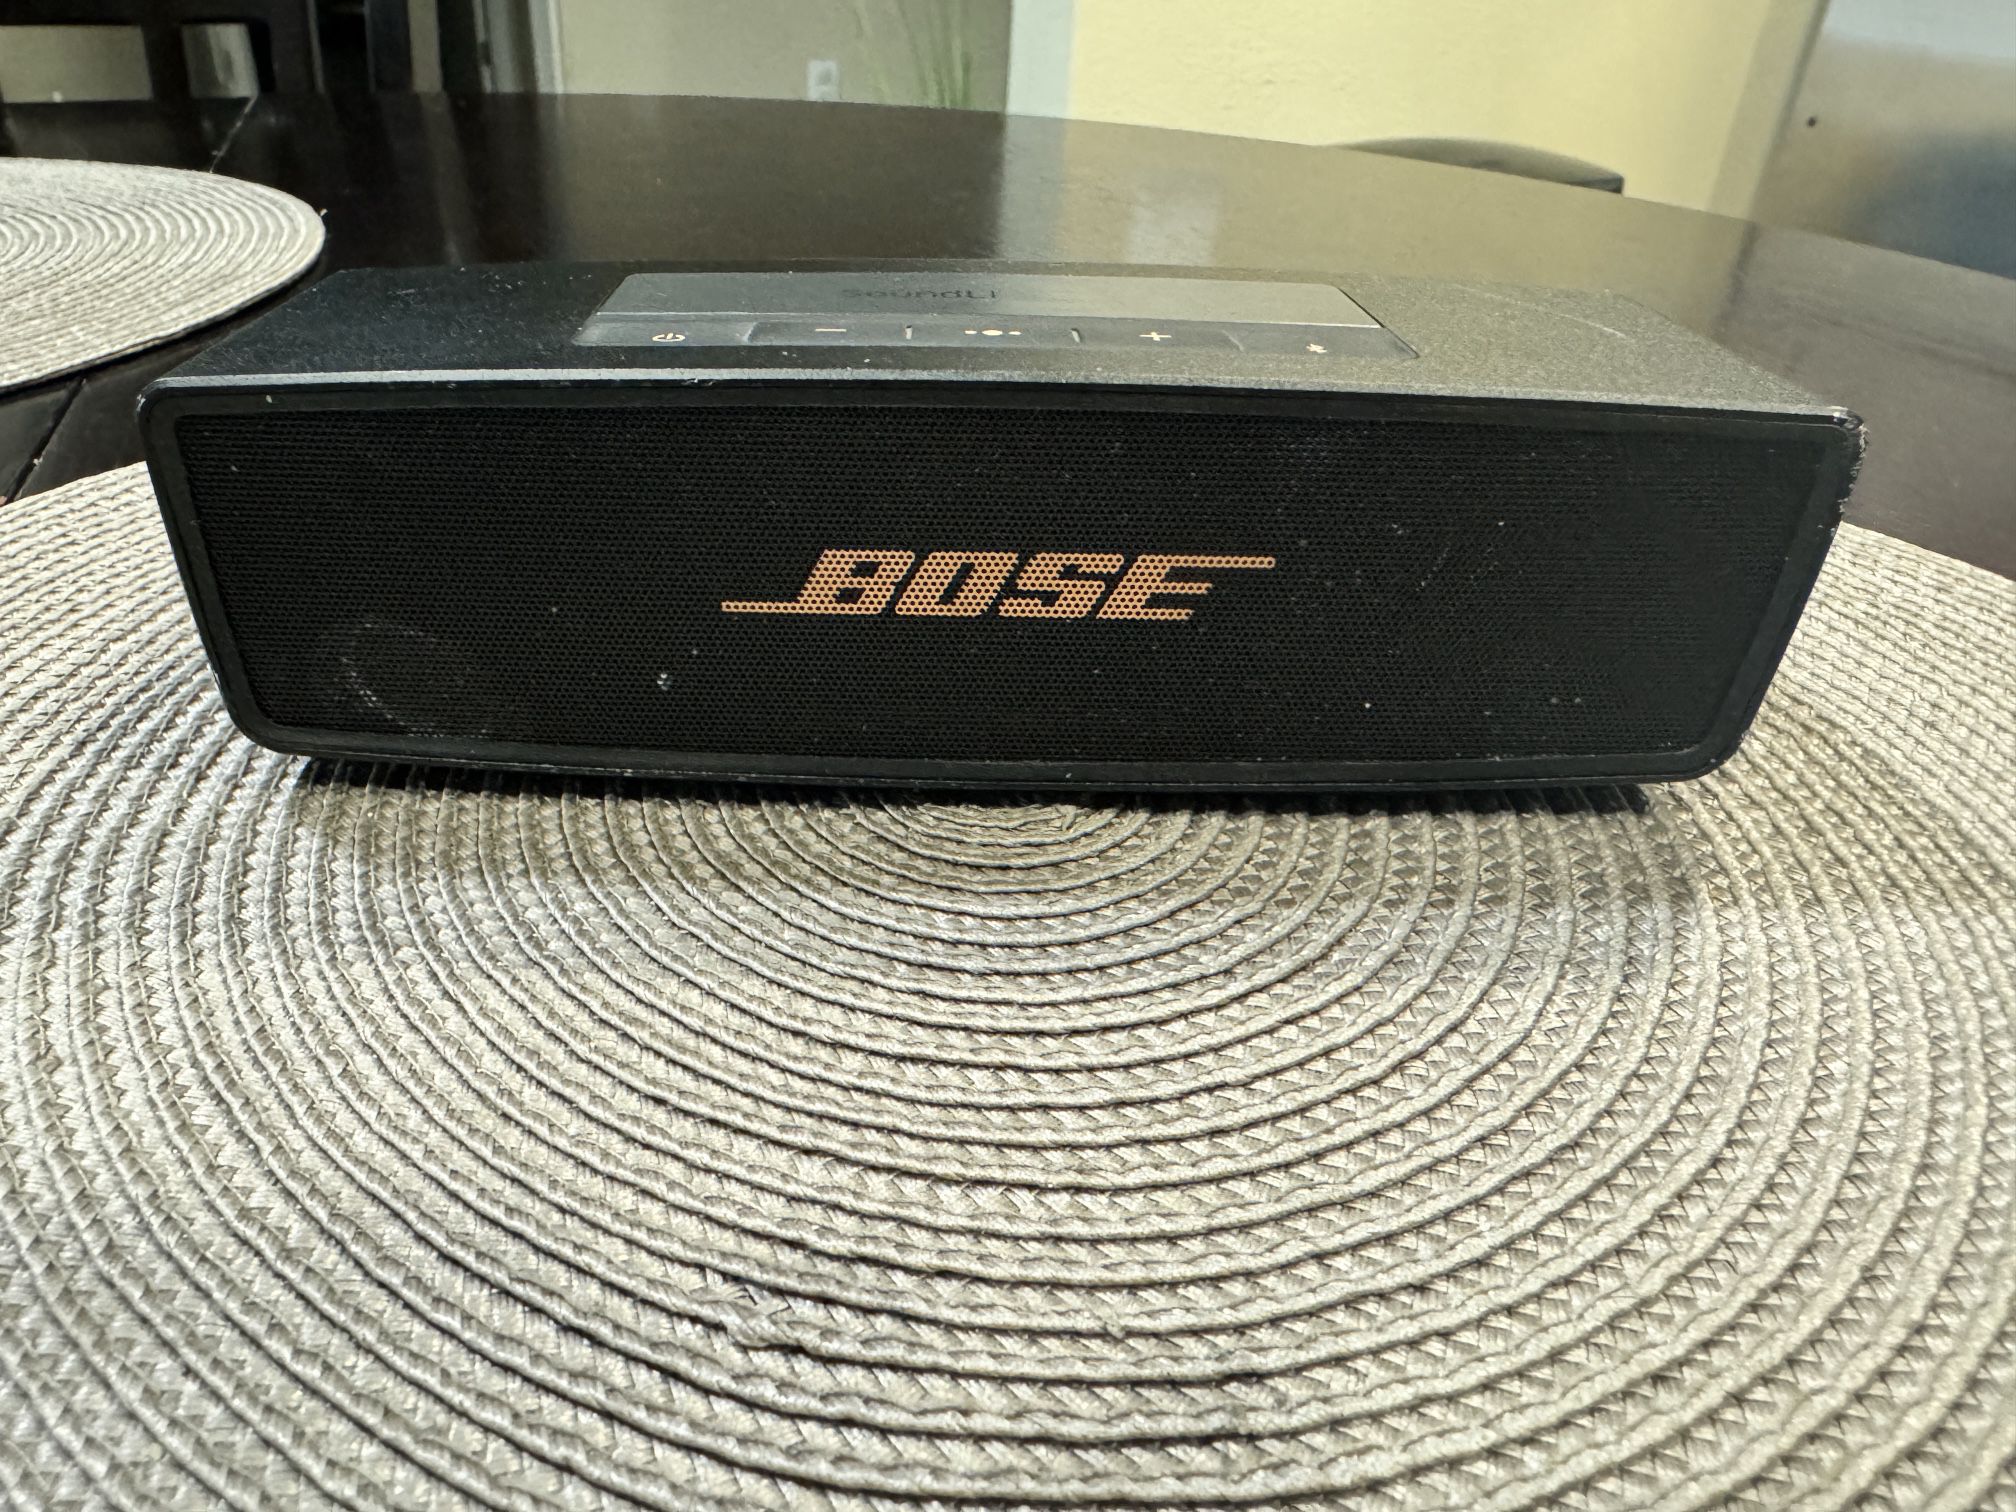 Bose soundlink Mini Il Limited Edition Bluetooth Speaker